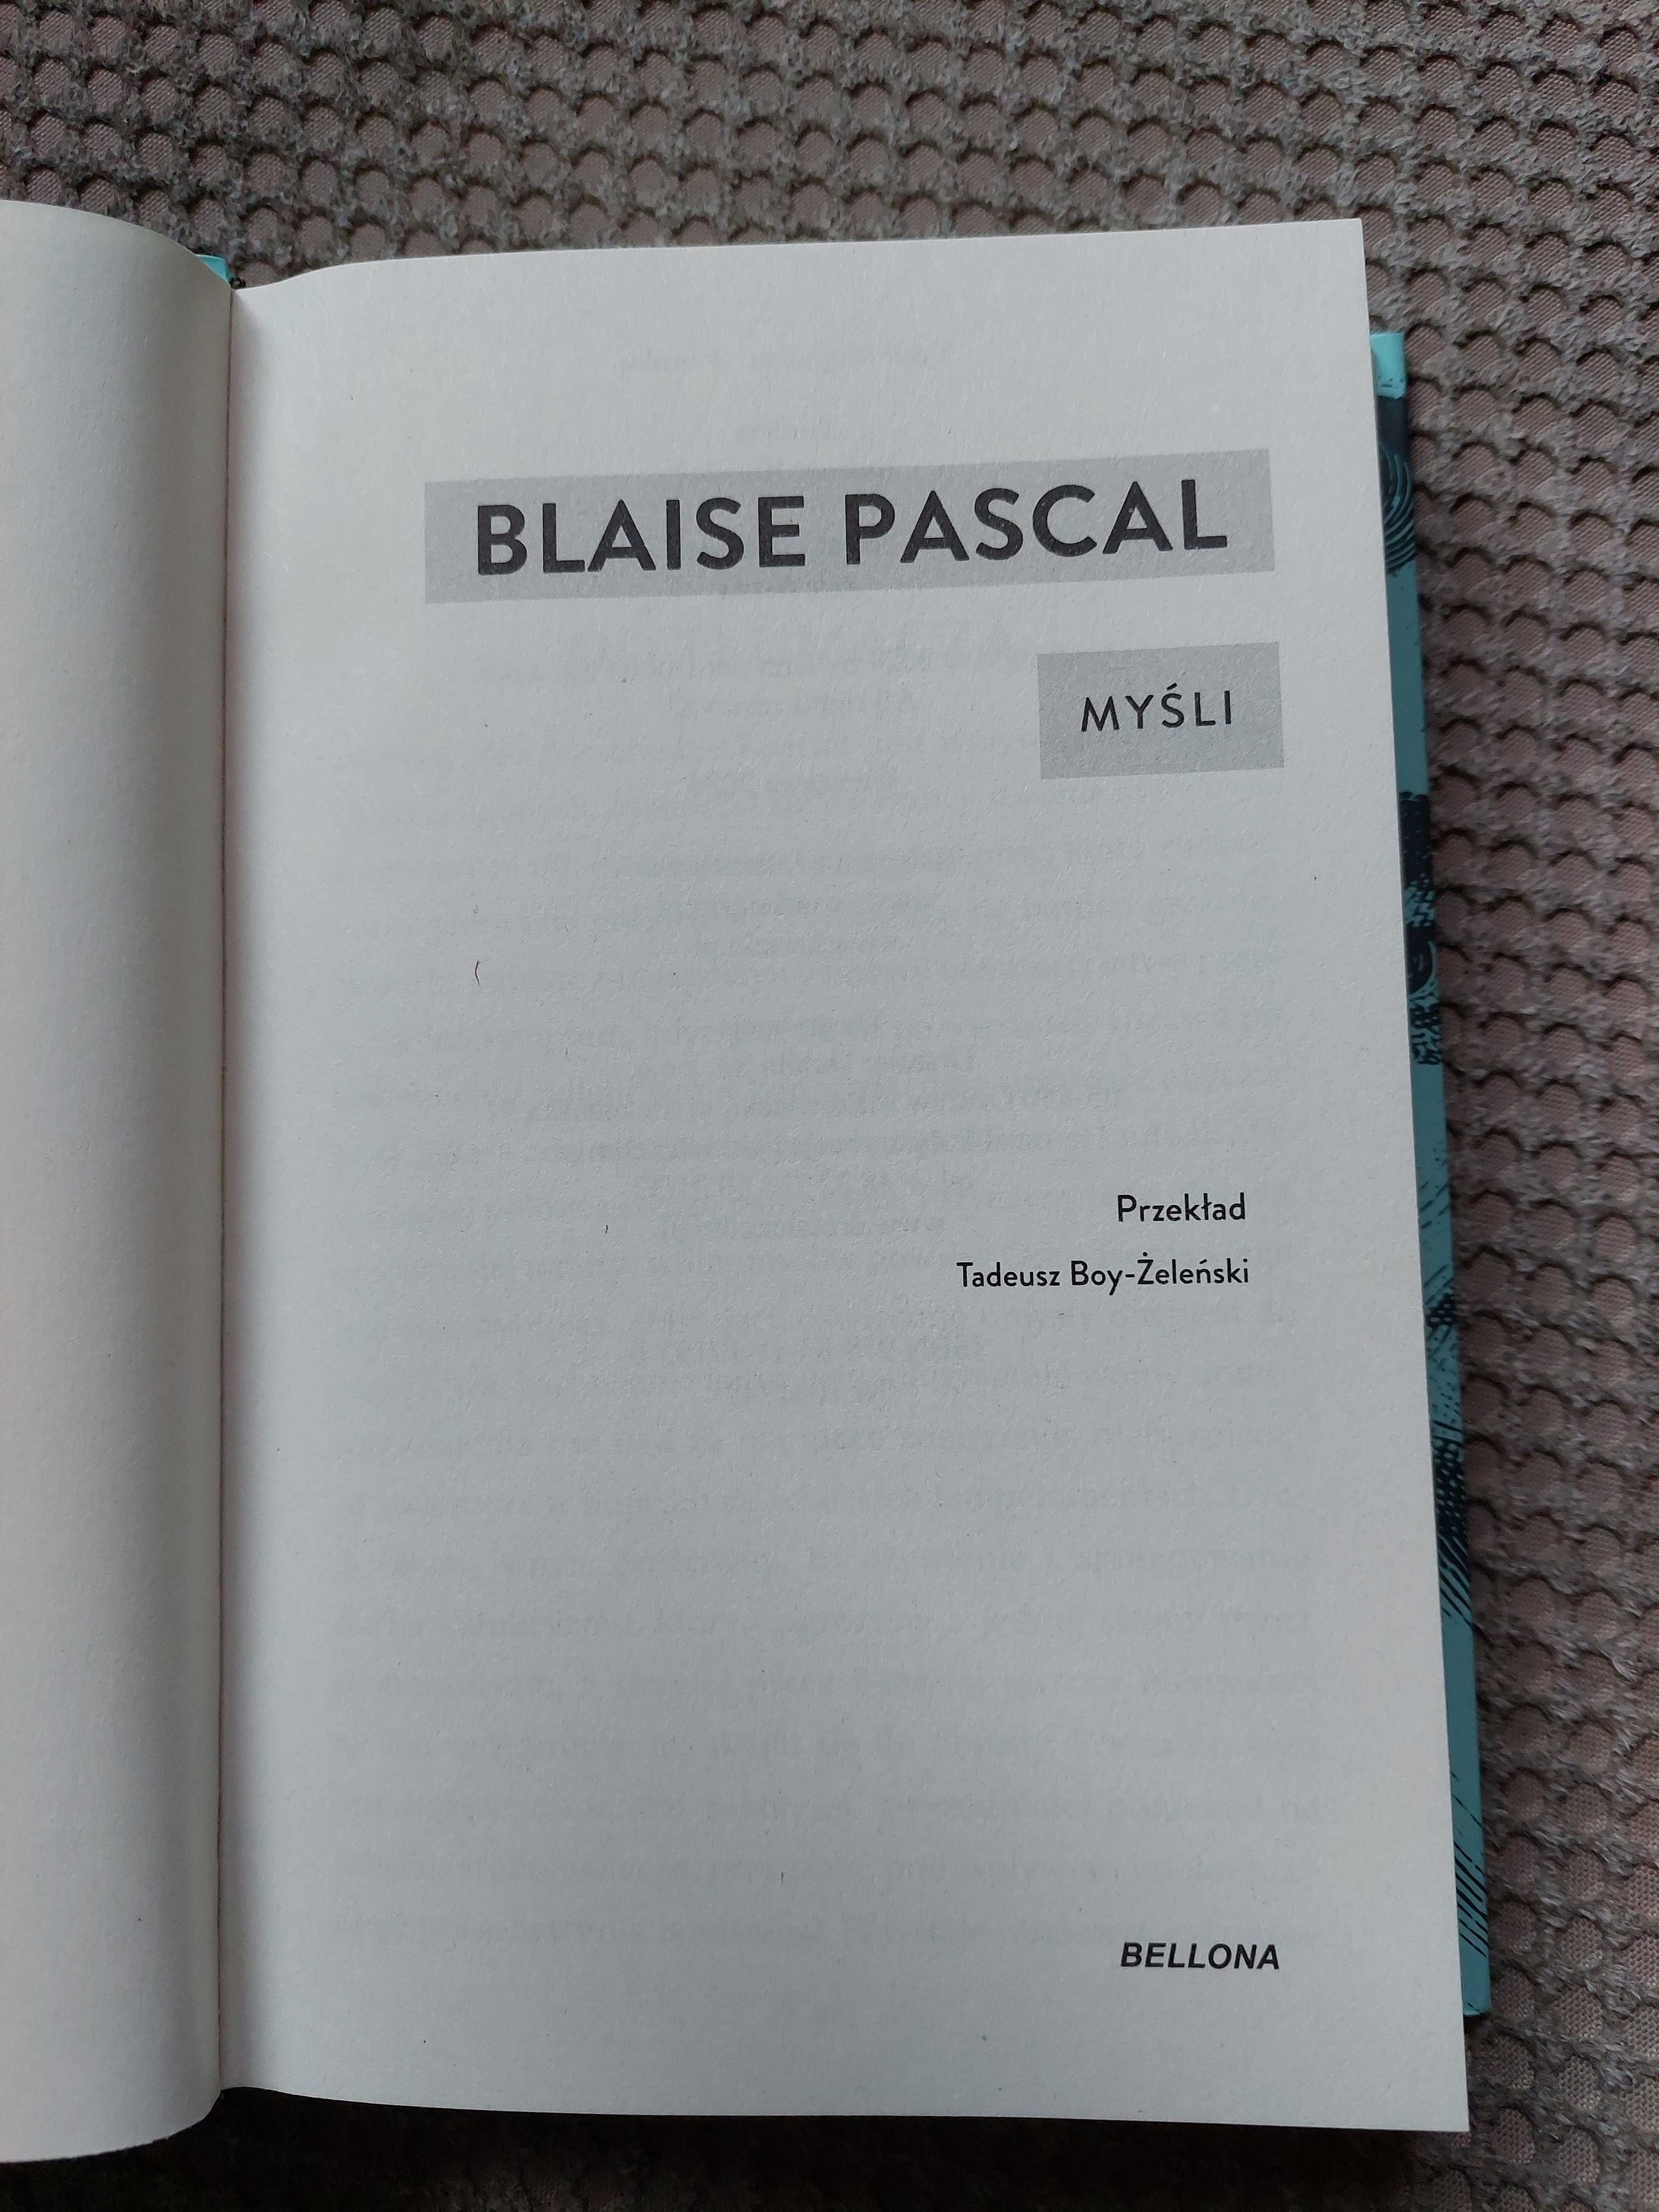 "MYŚLI" Blaise Pascal